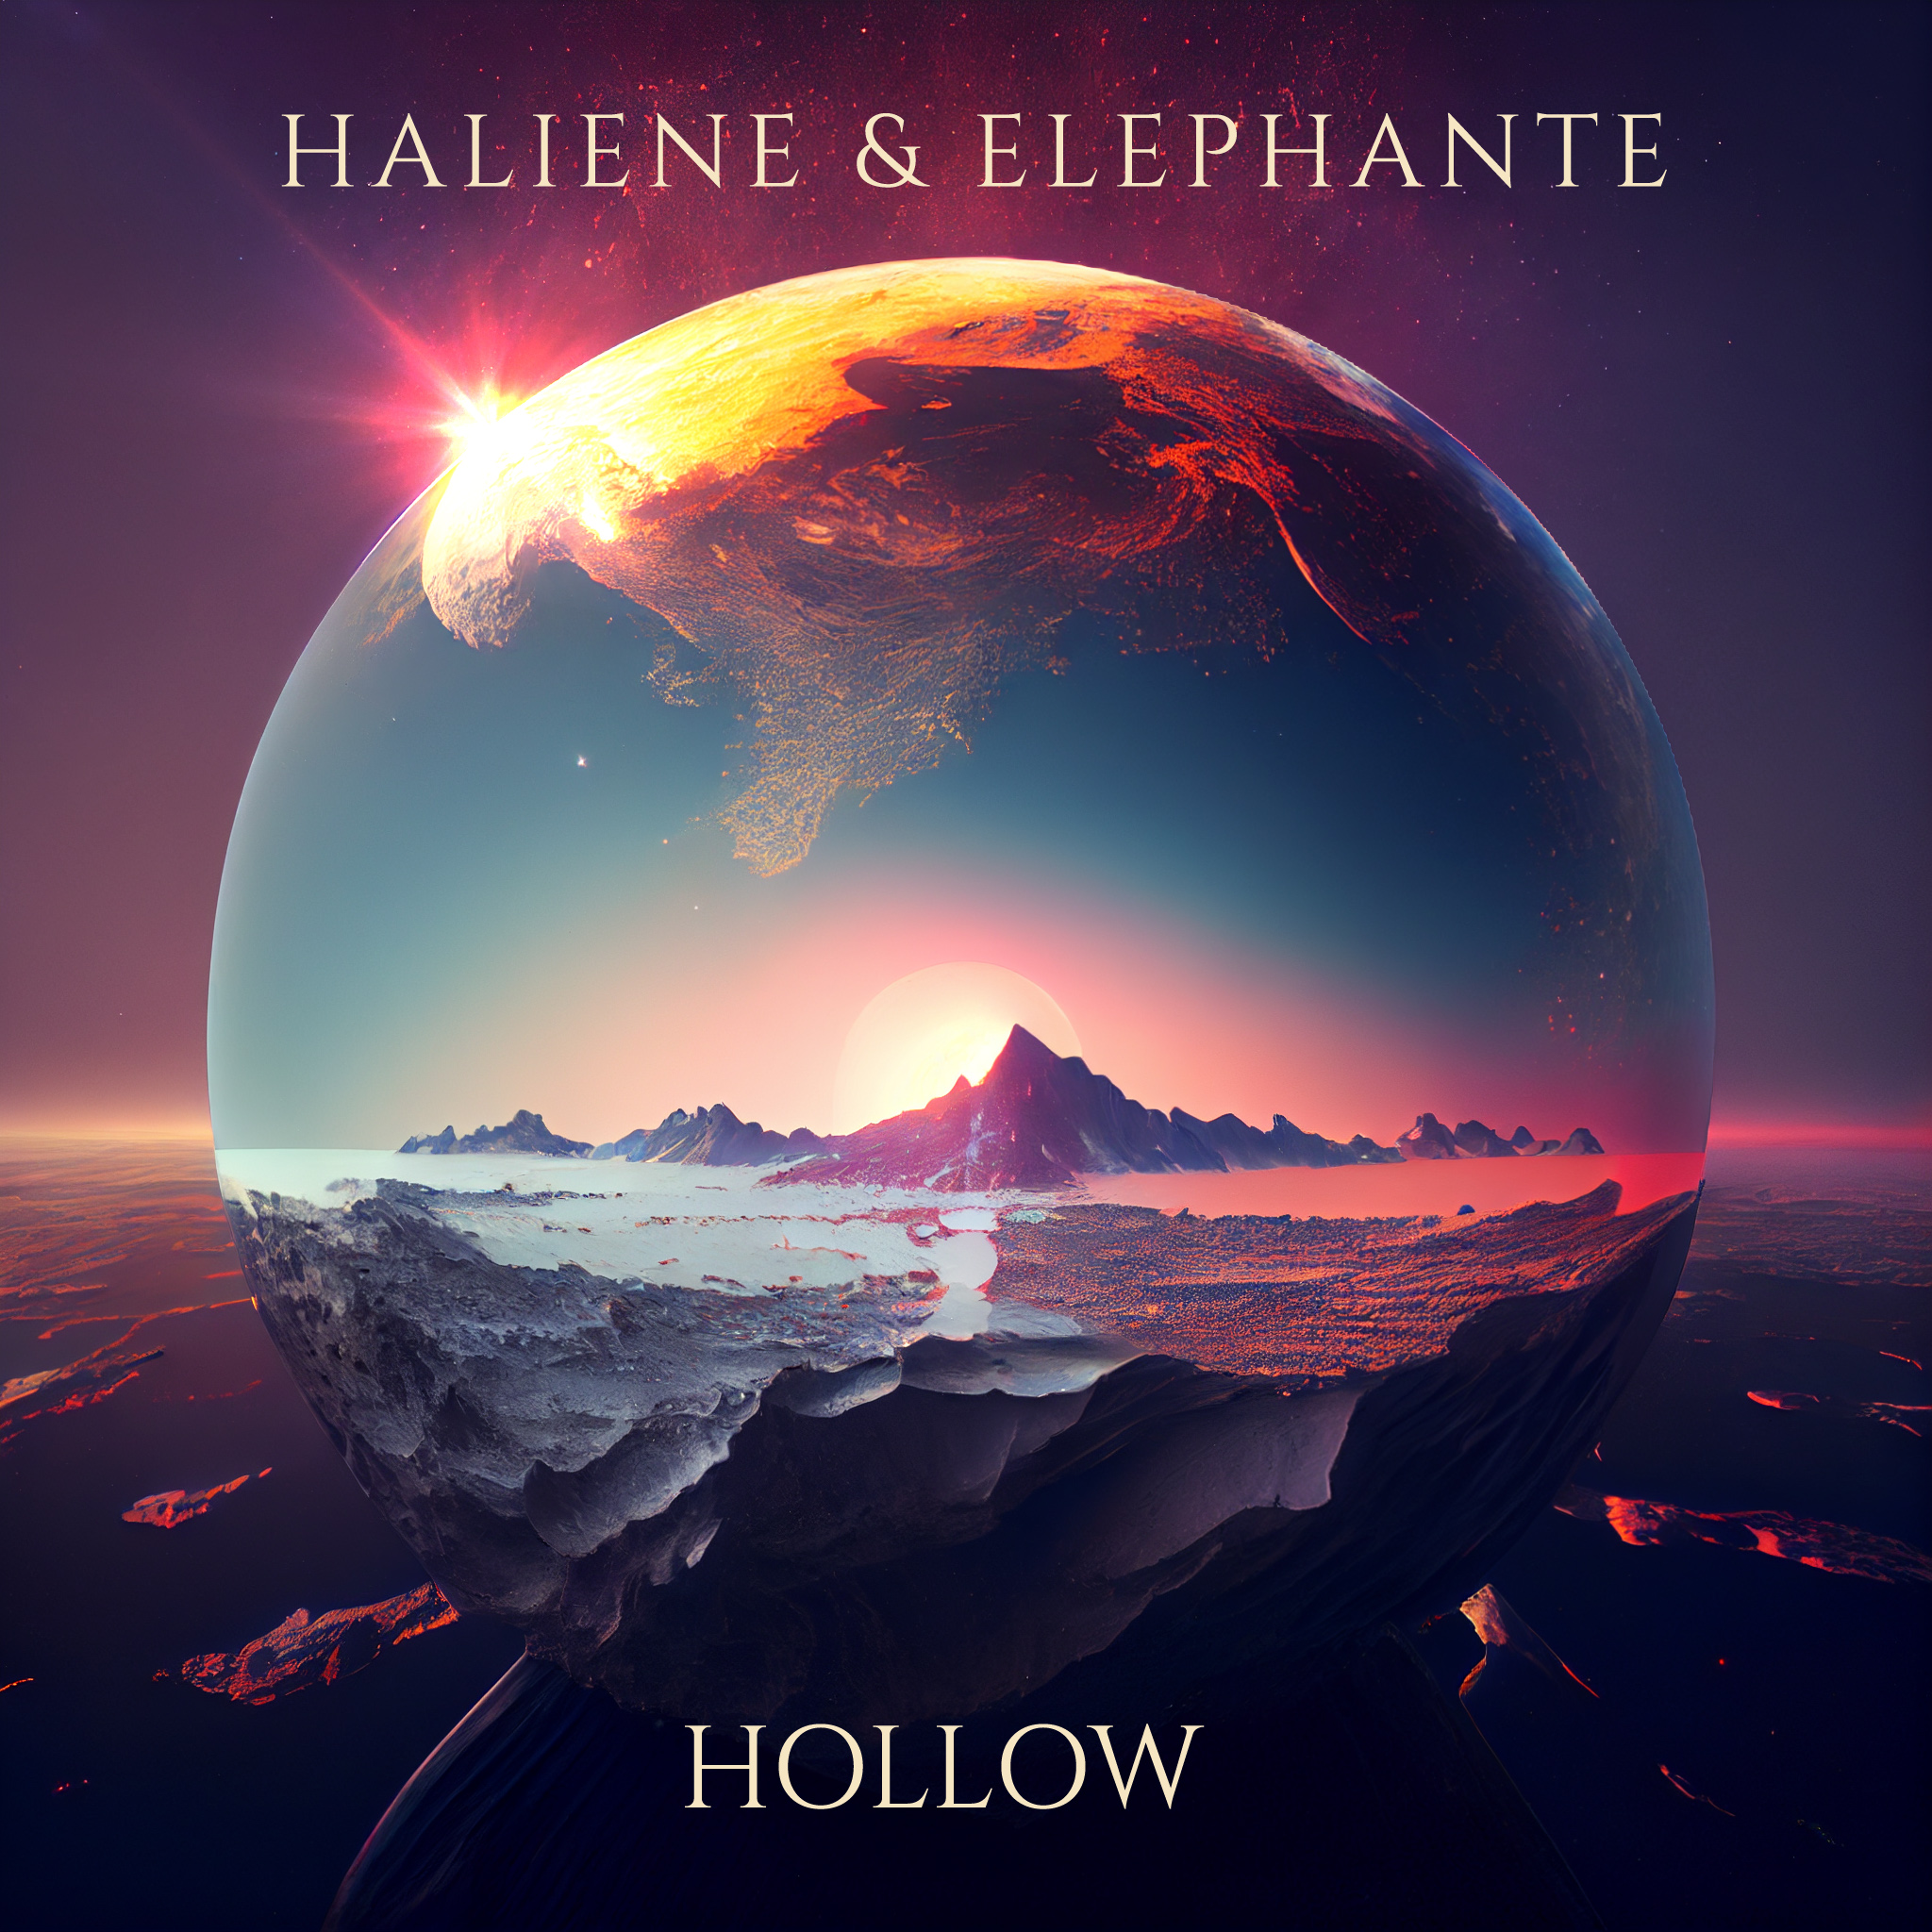 HALIENE and Elephante presents Hollow on Black Hole Recordings